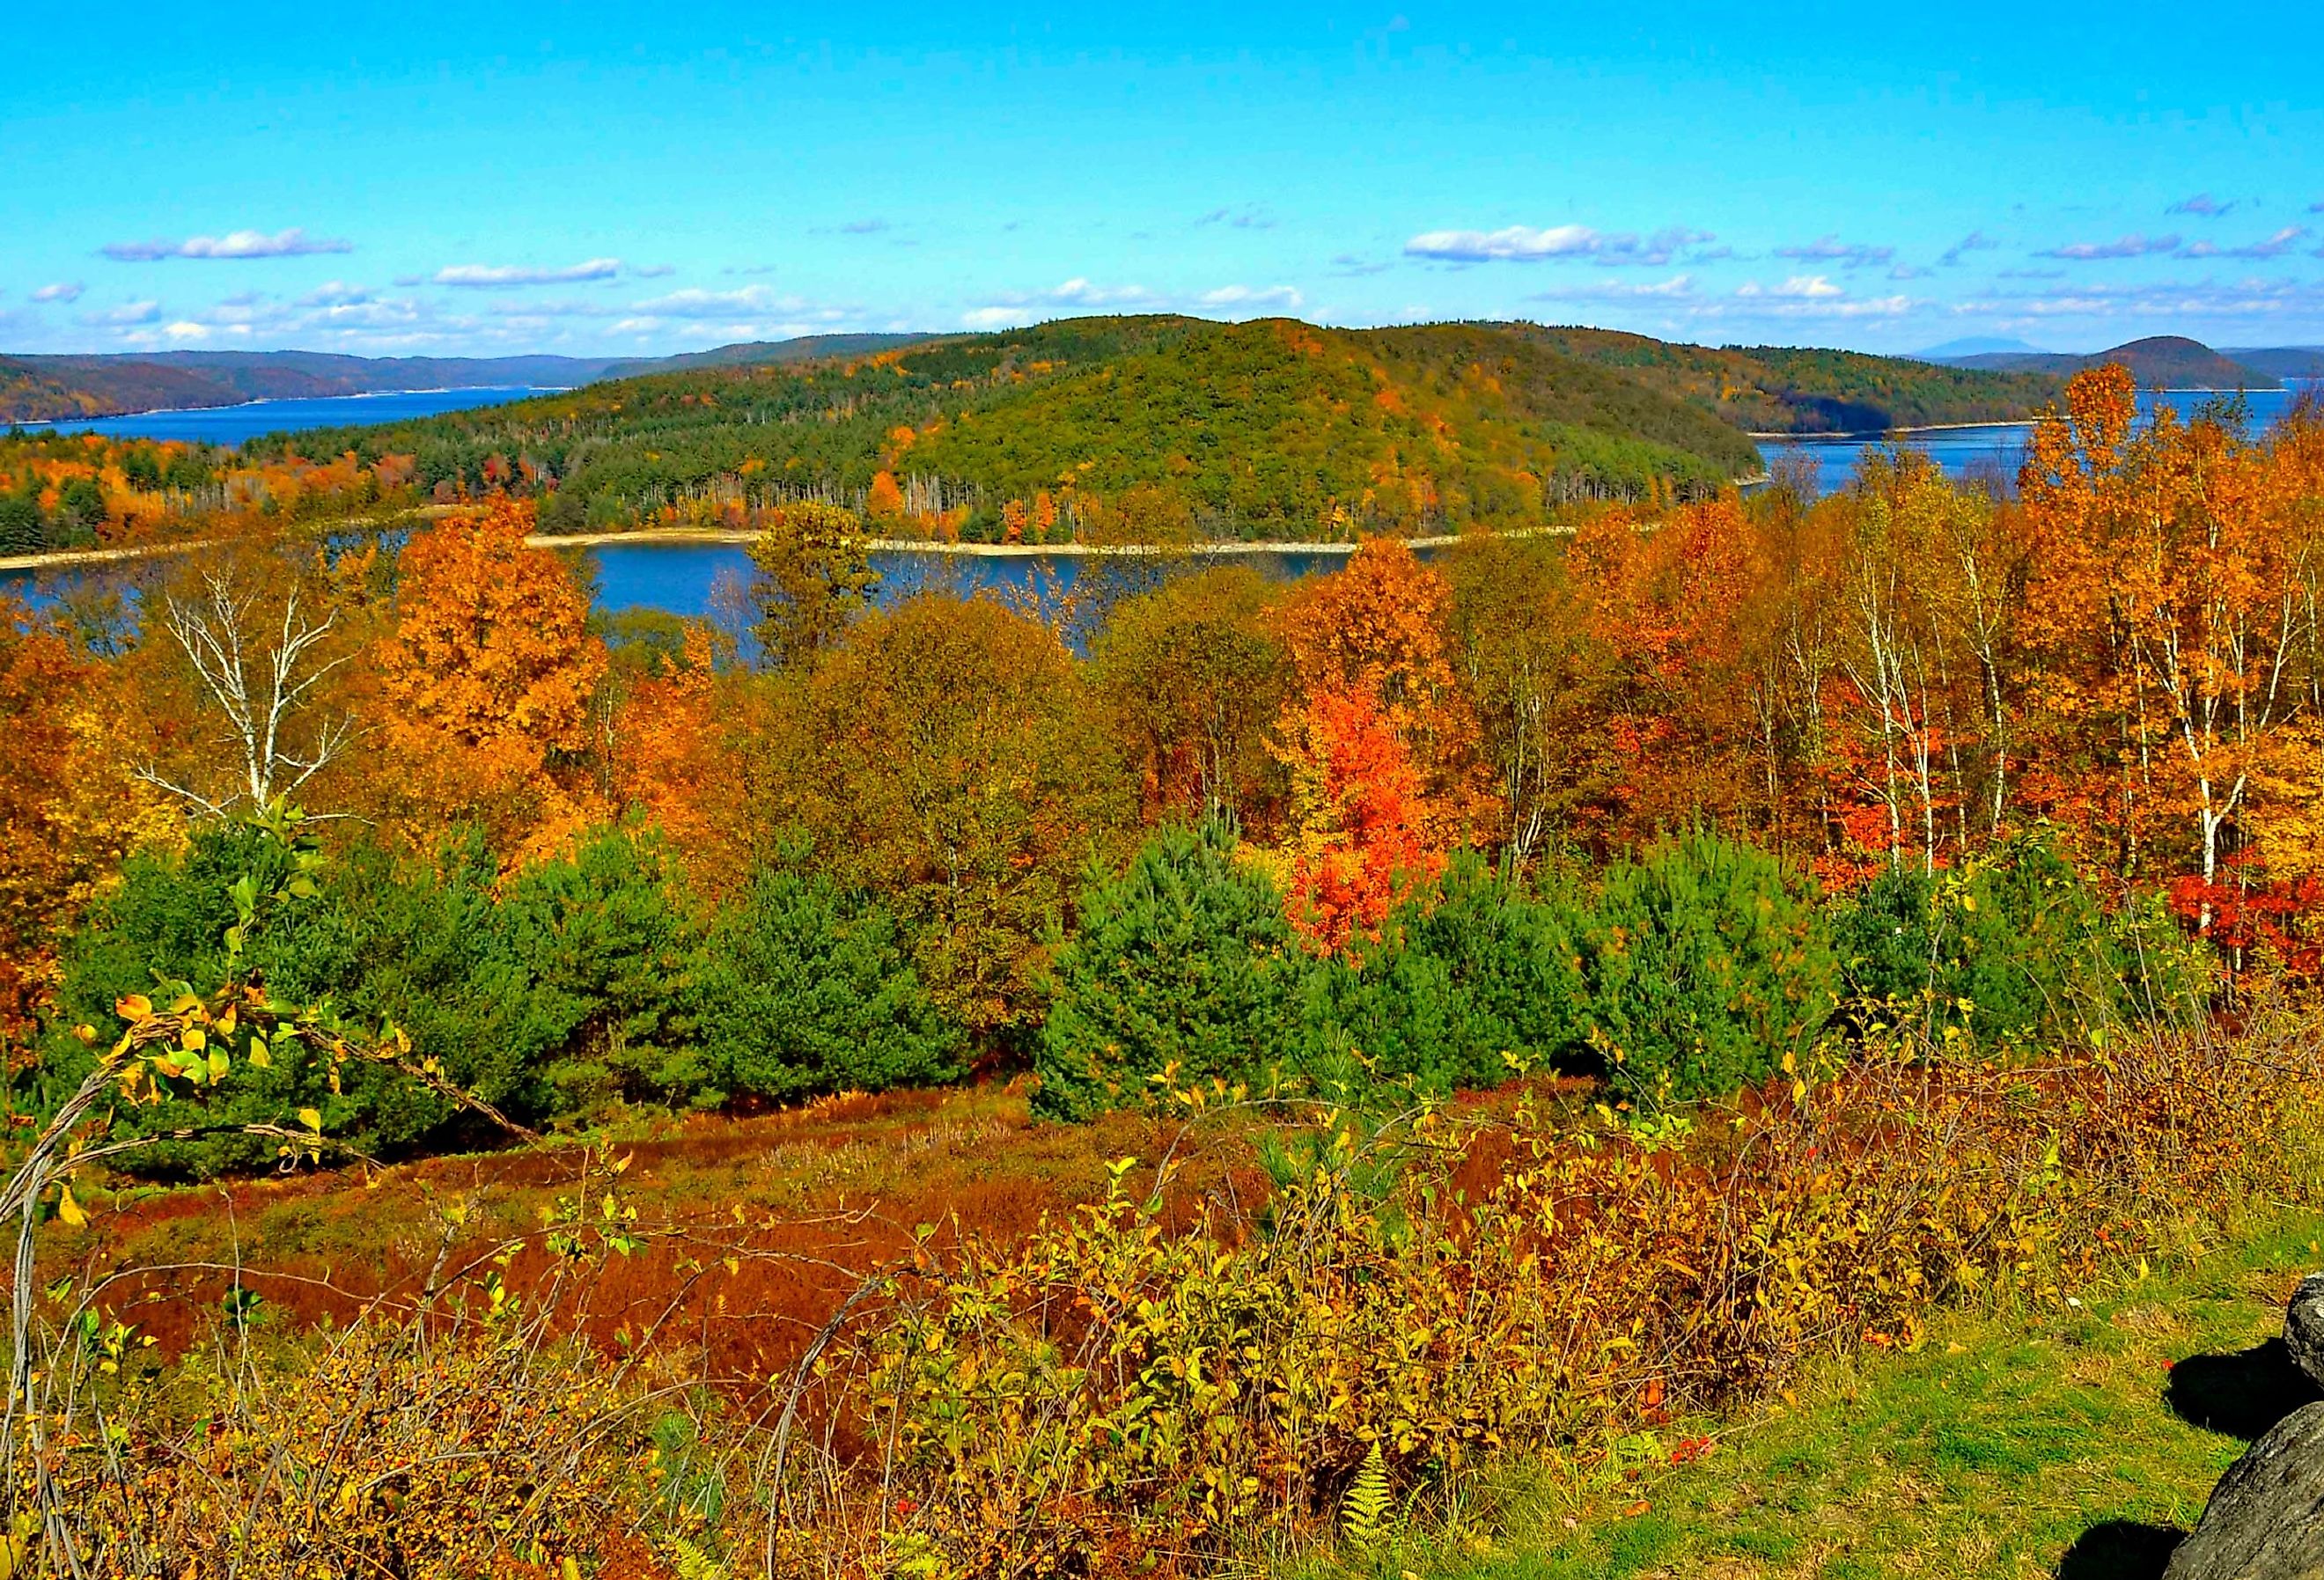 Quabbin Reservoir in Massachusetts during peak foliage season.